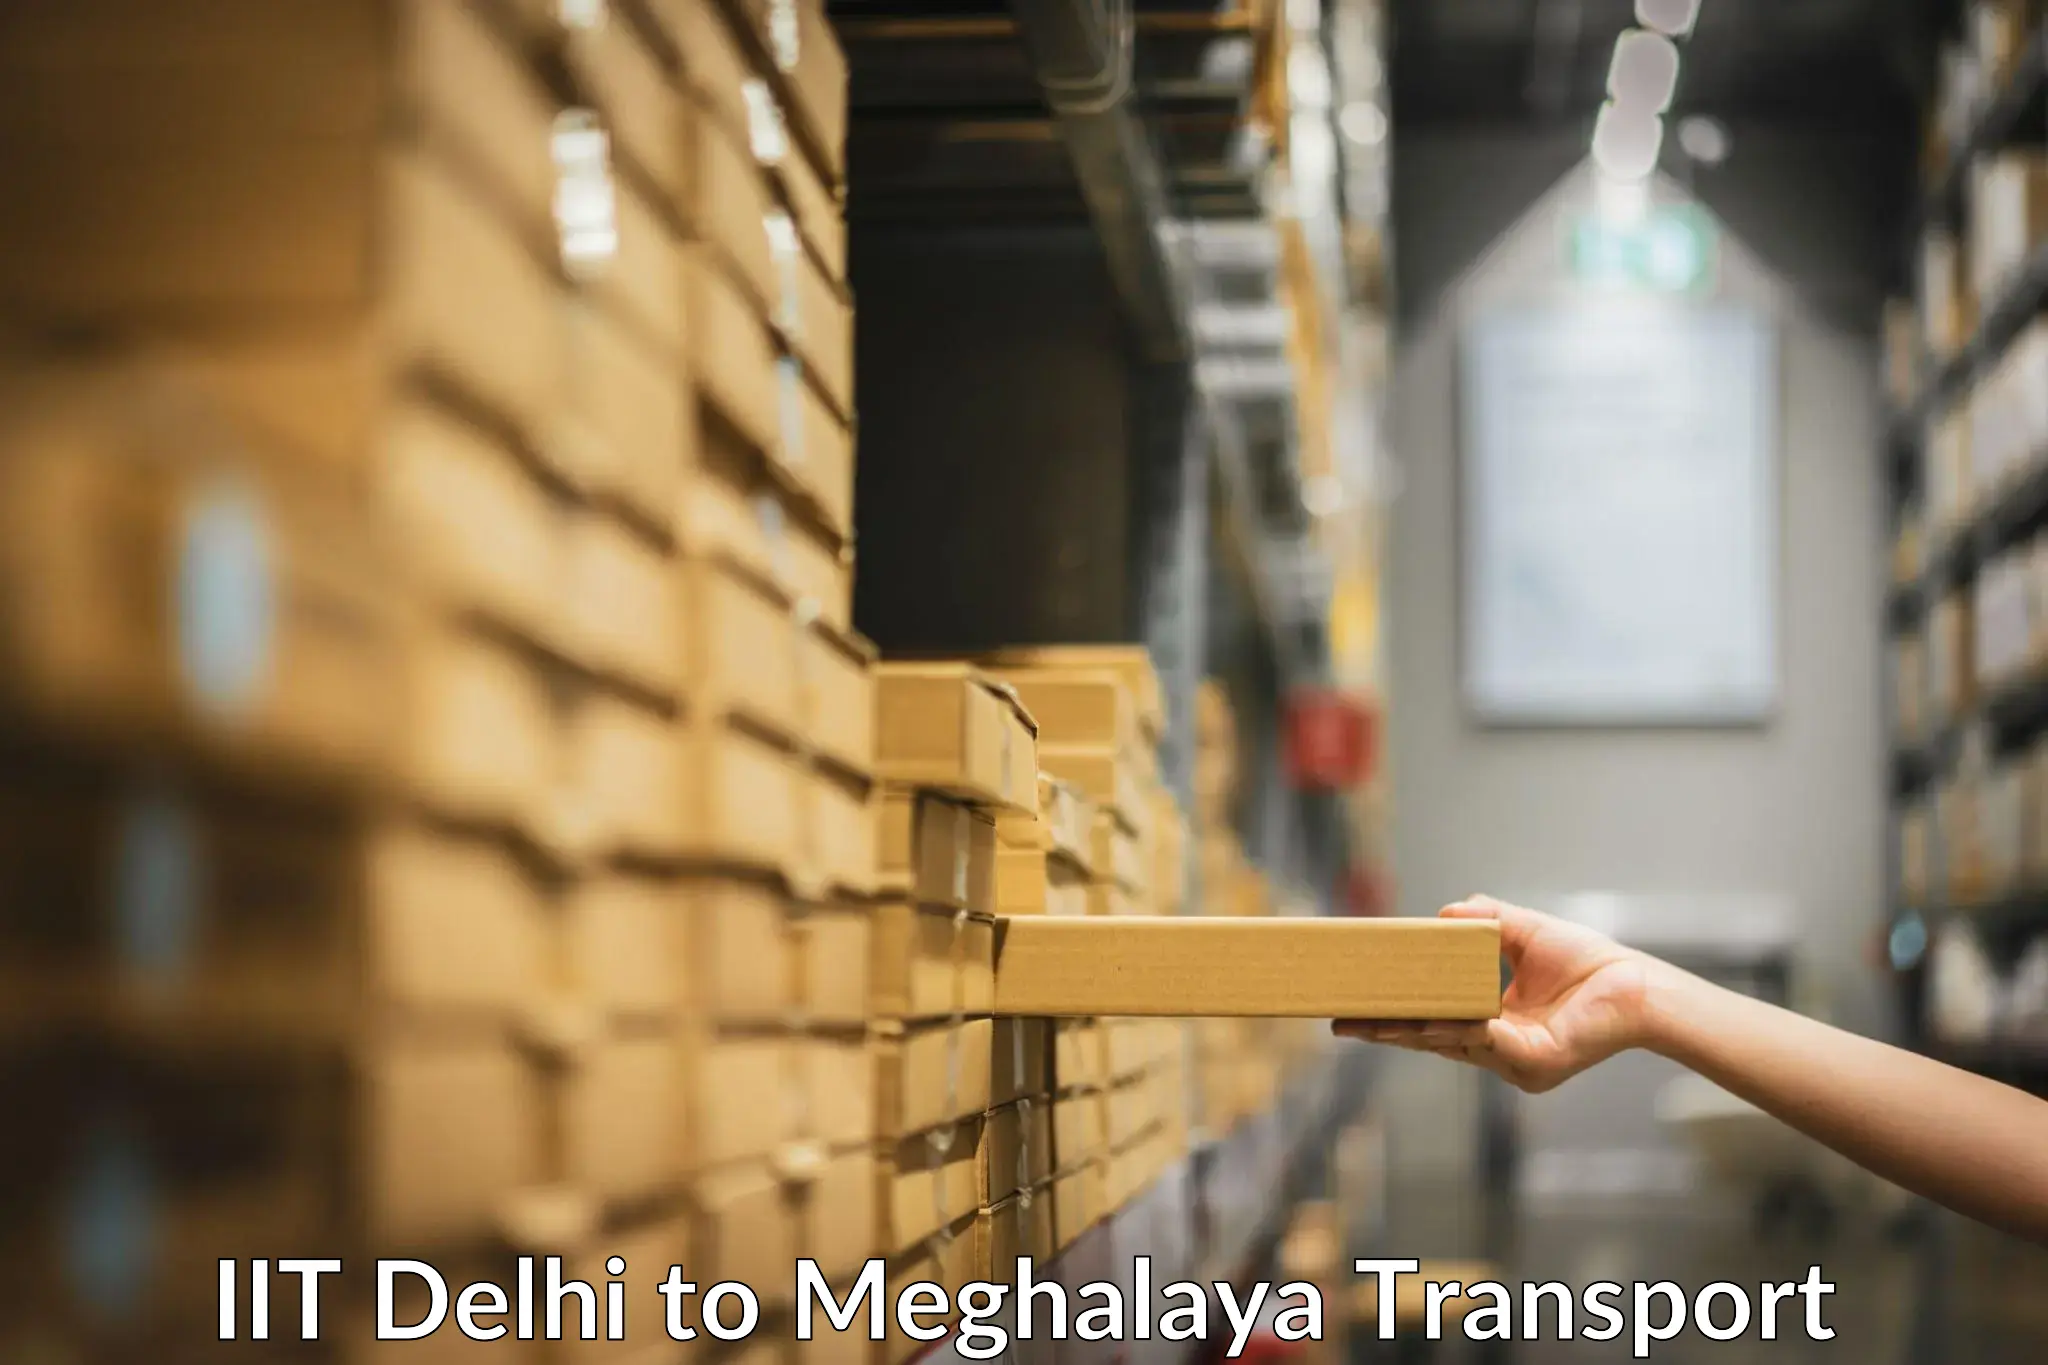 Online transport service IIT Delhi to Meghalaya